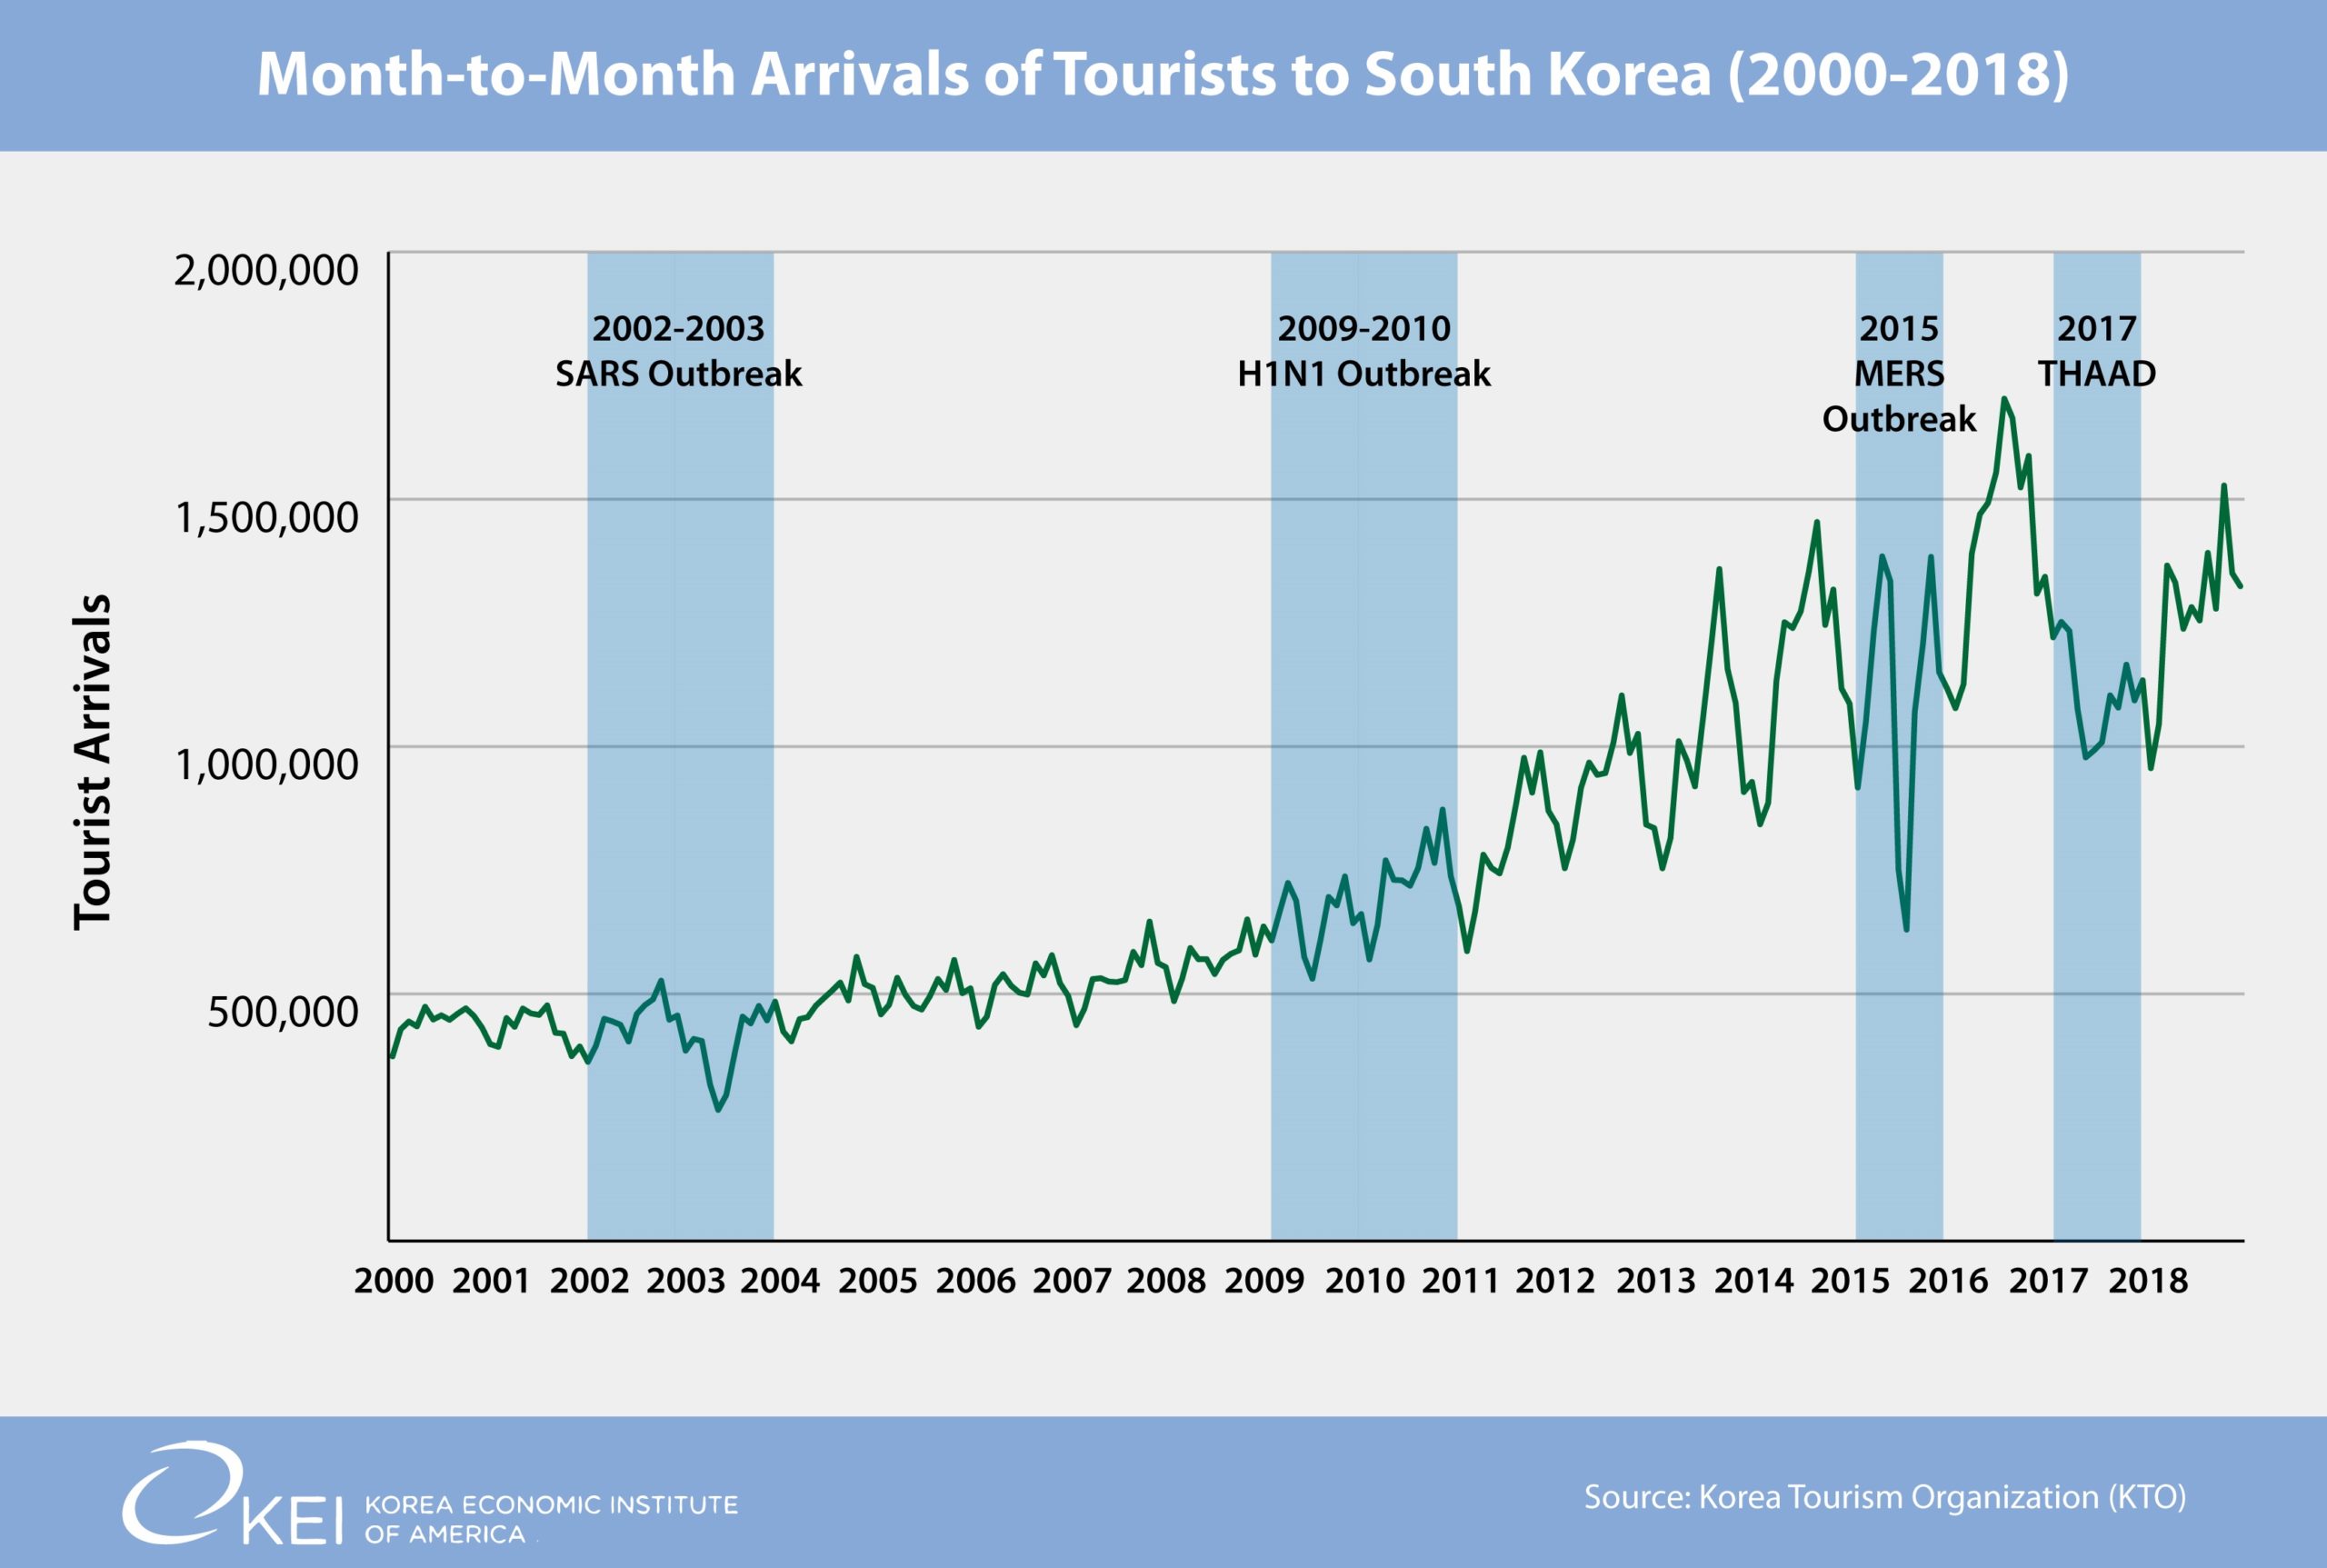 korea tourism organization data